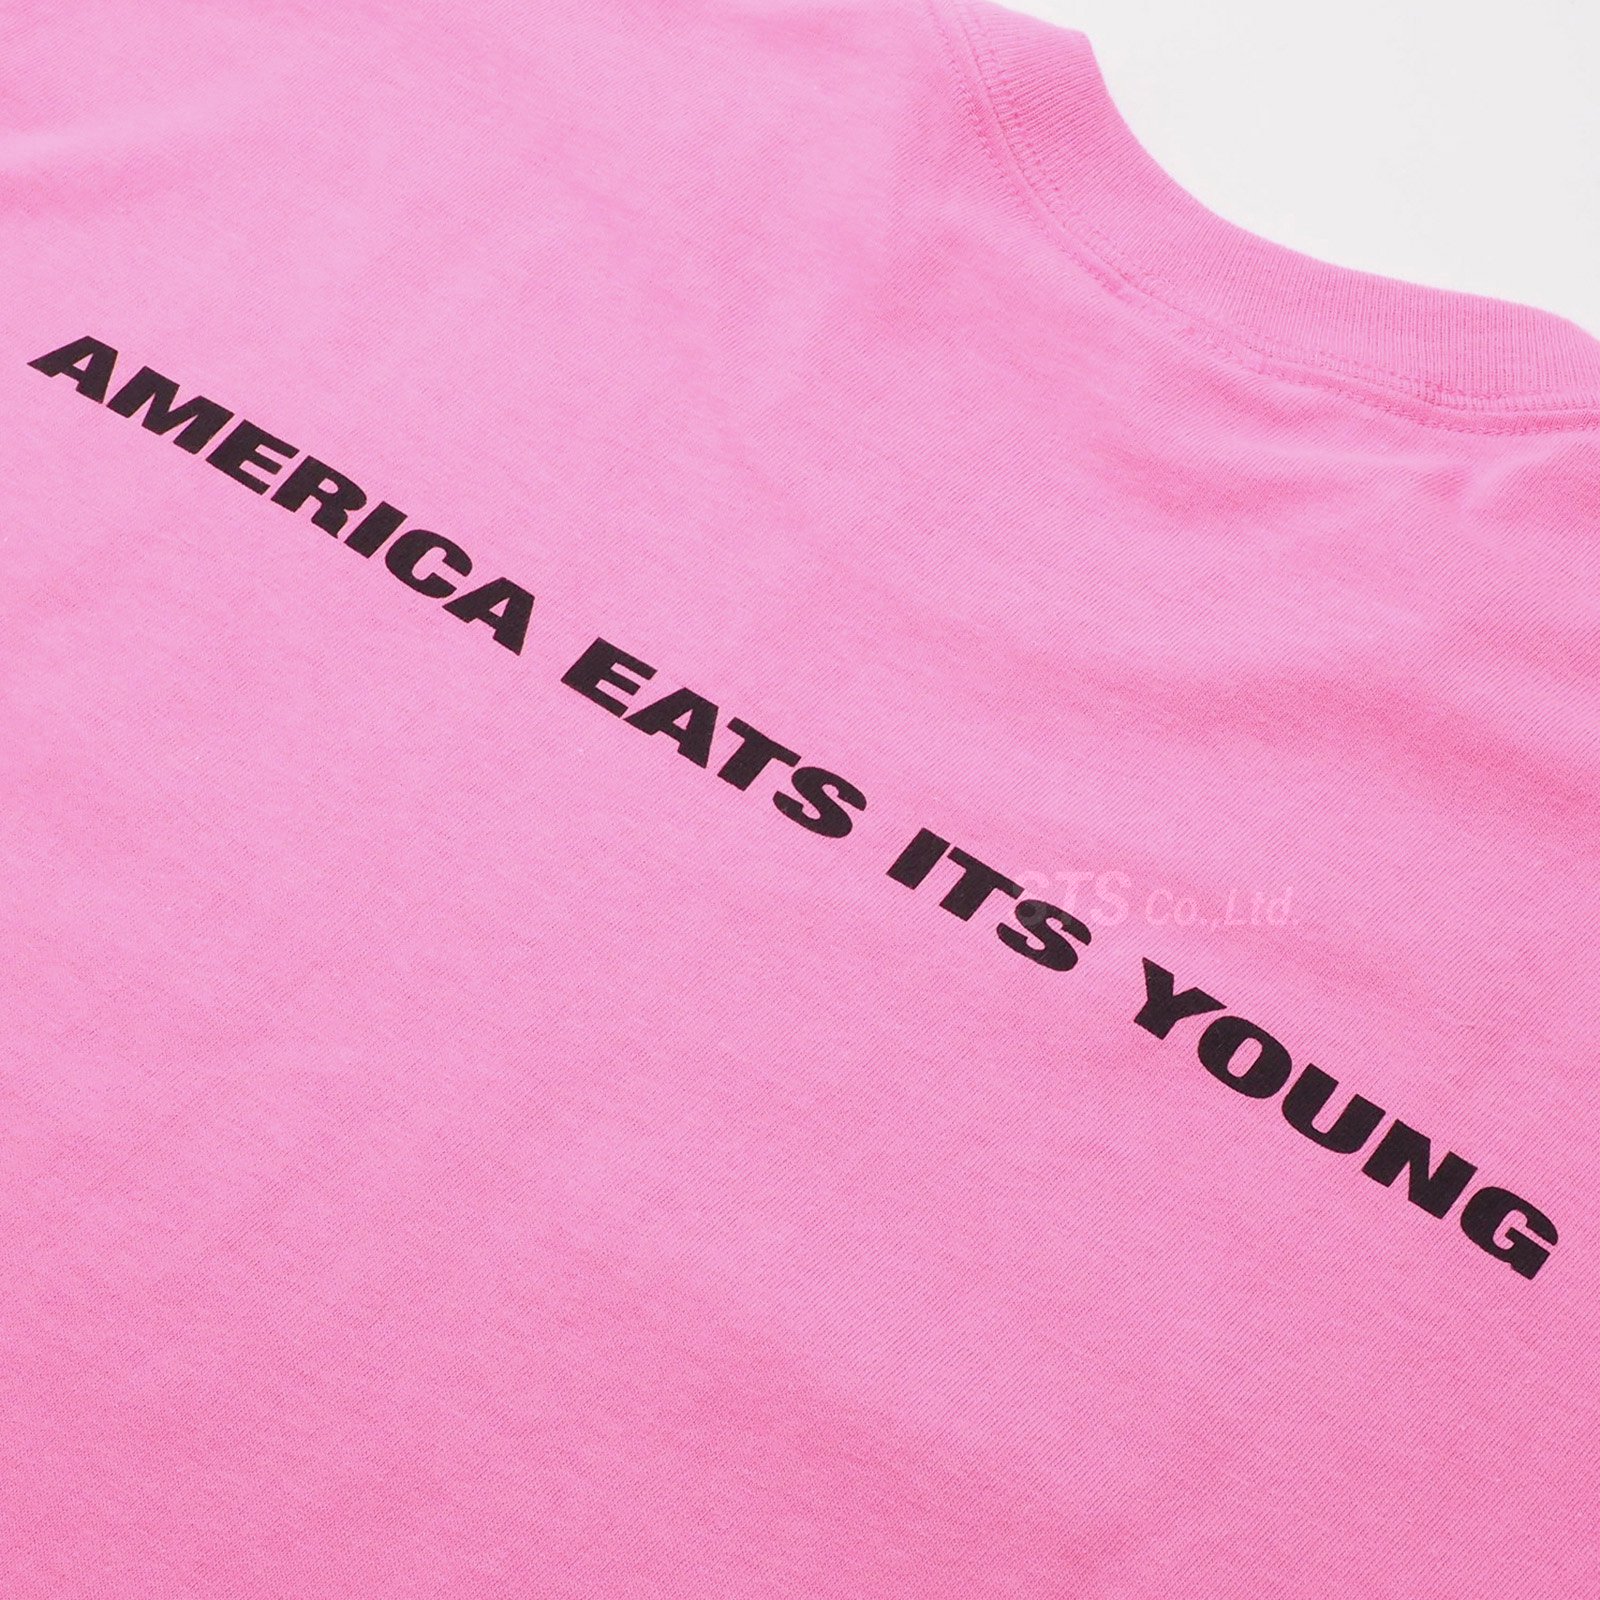 Supreme - America Eats Its Young Tee - UG.SHAFT